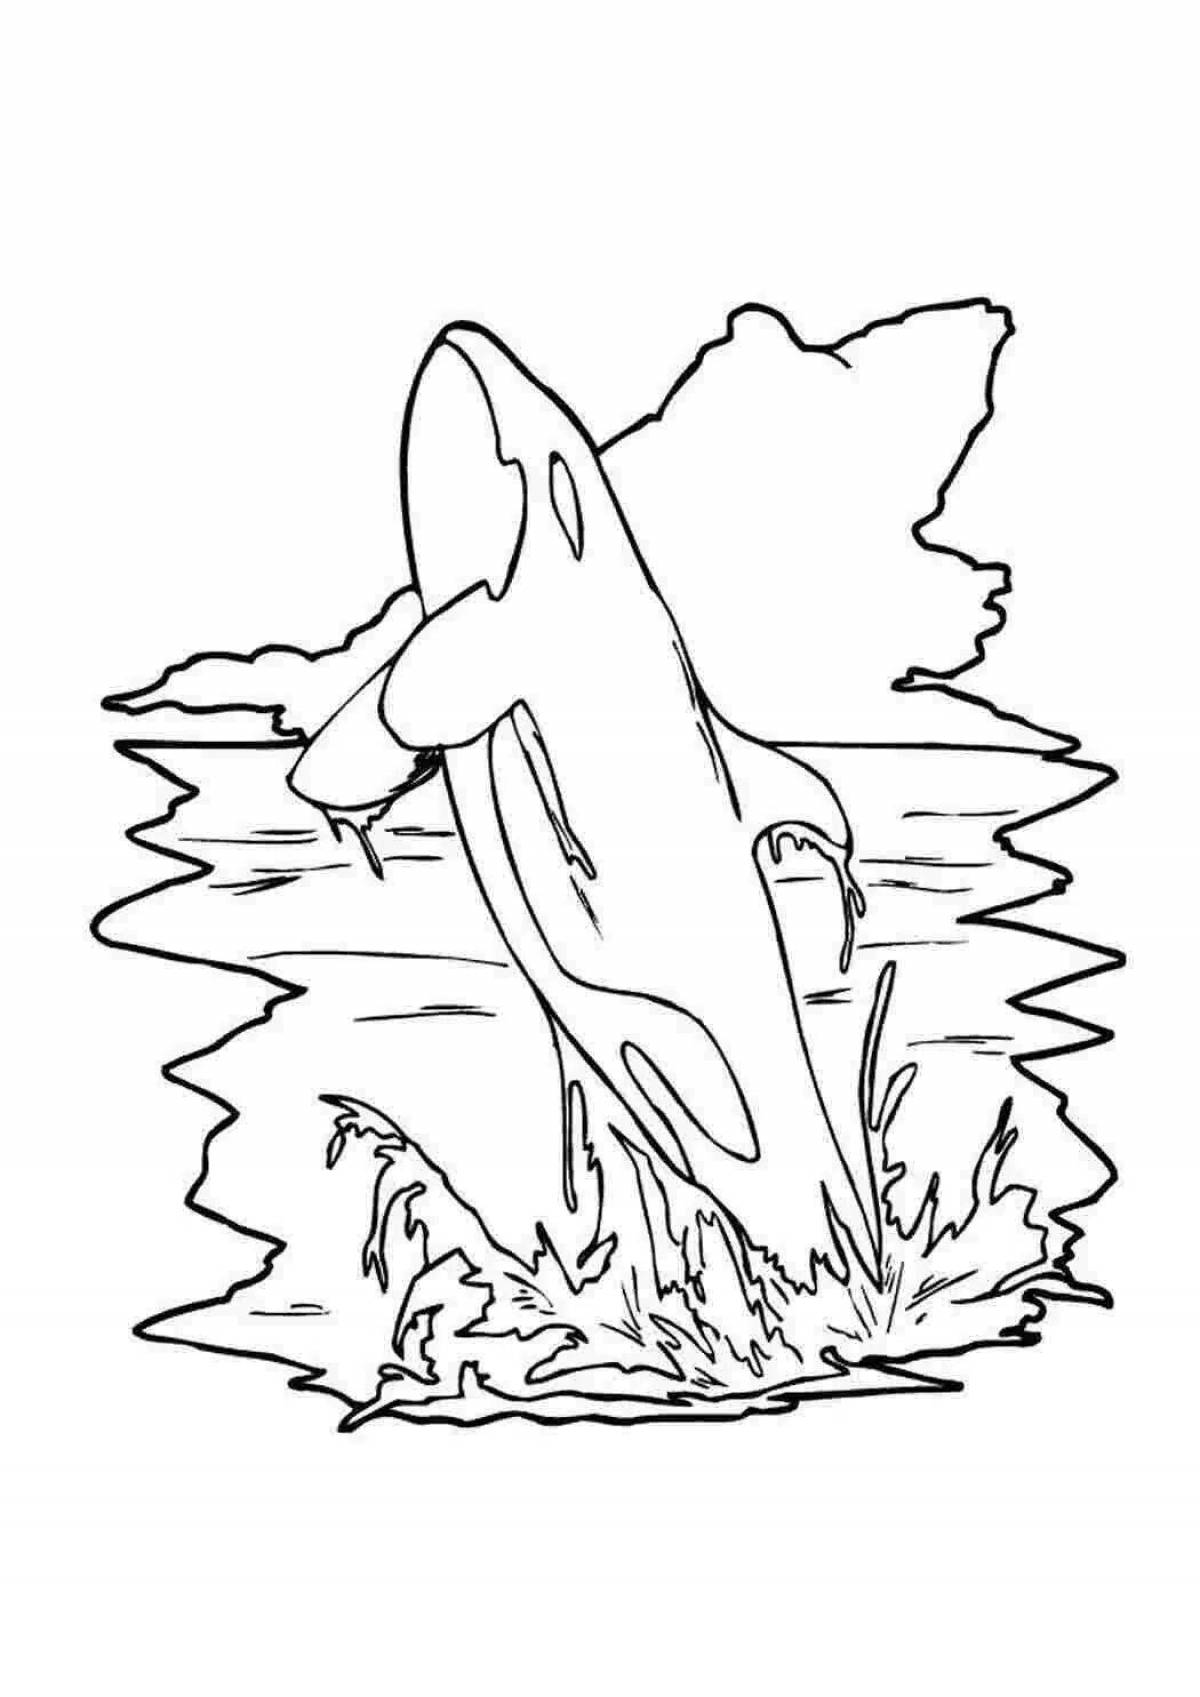 Impressive killer whale coloring page